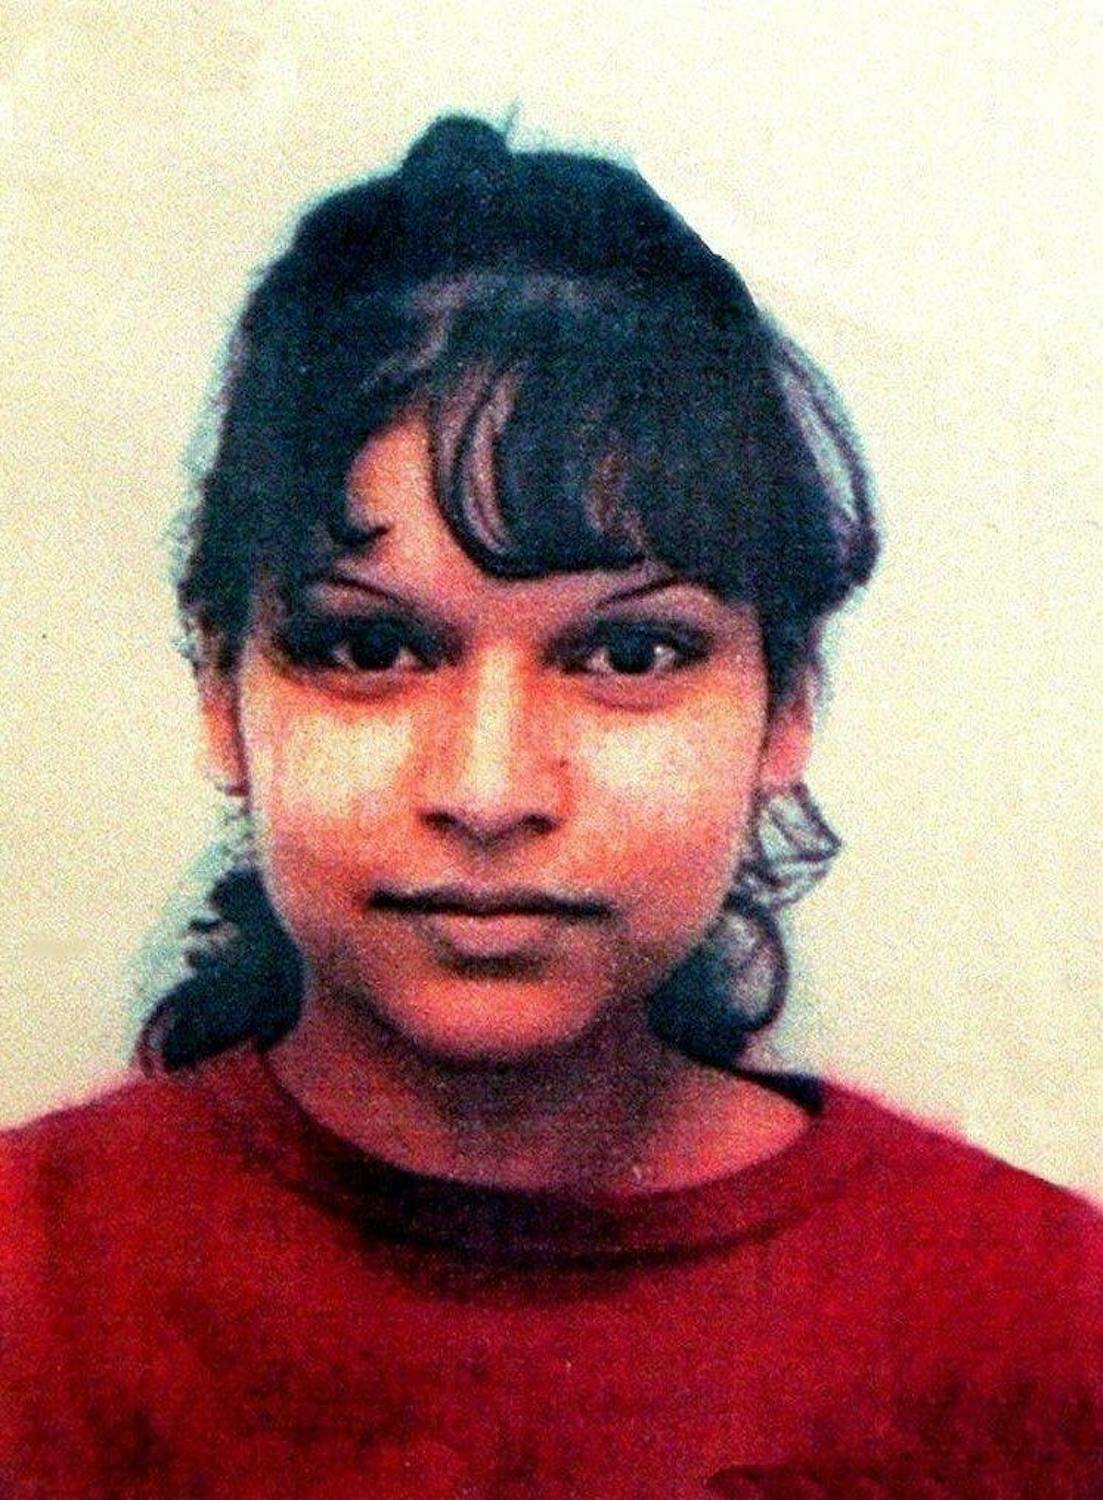 111 - Unsolved: The killing of Belinda Pereira